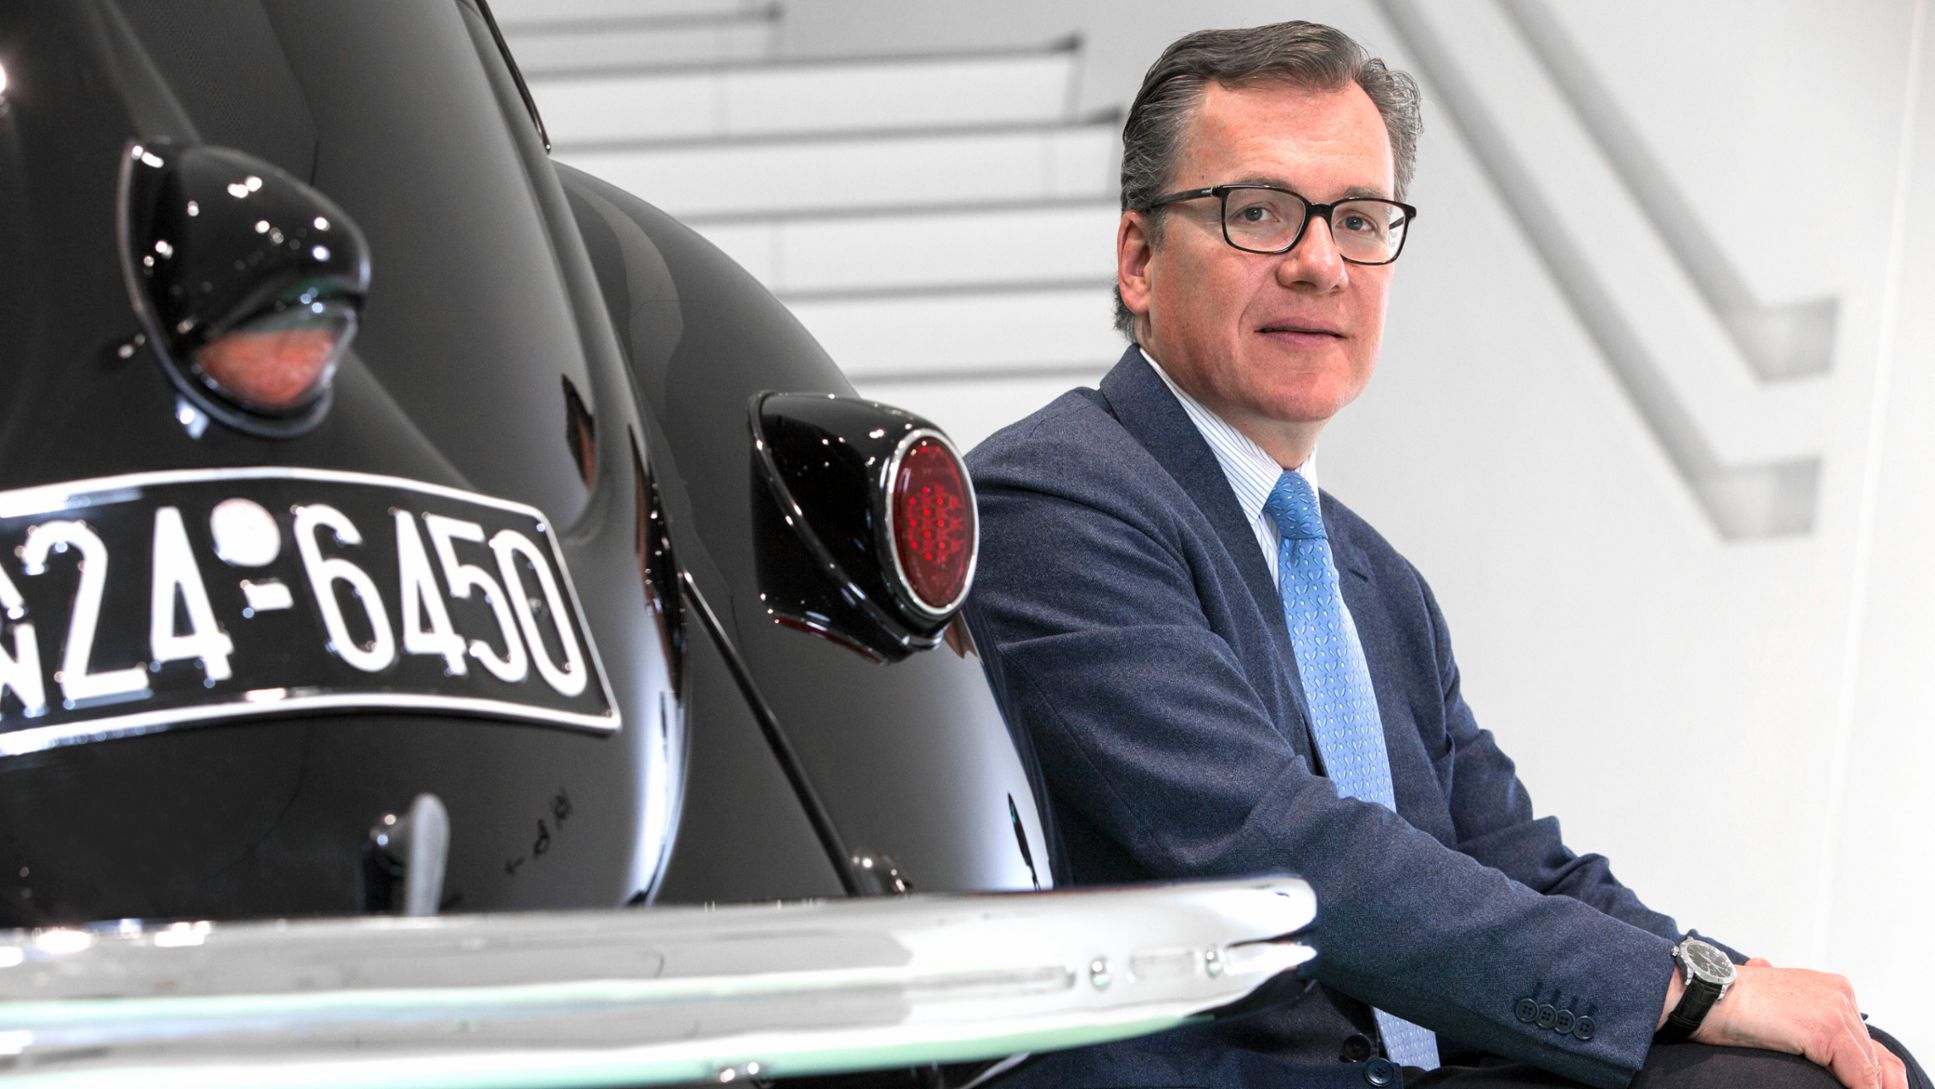 Marcus Baur, Chef des Automobilzulieferers Bocar, 2016, Porsche Consulting GmbH